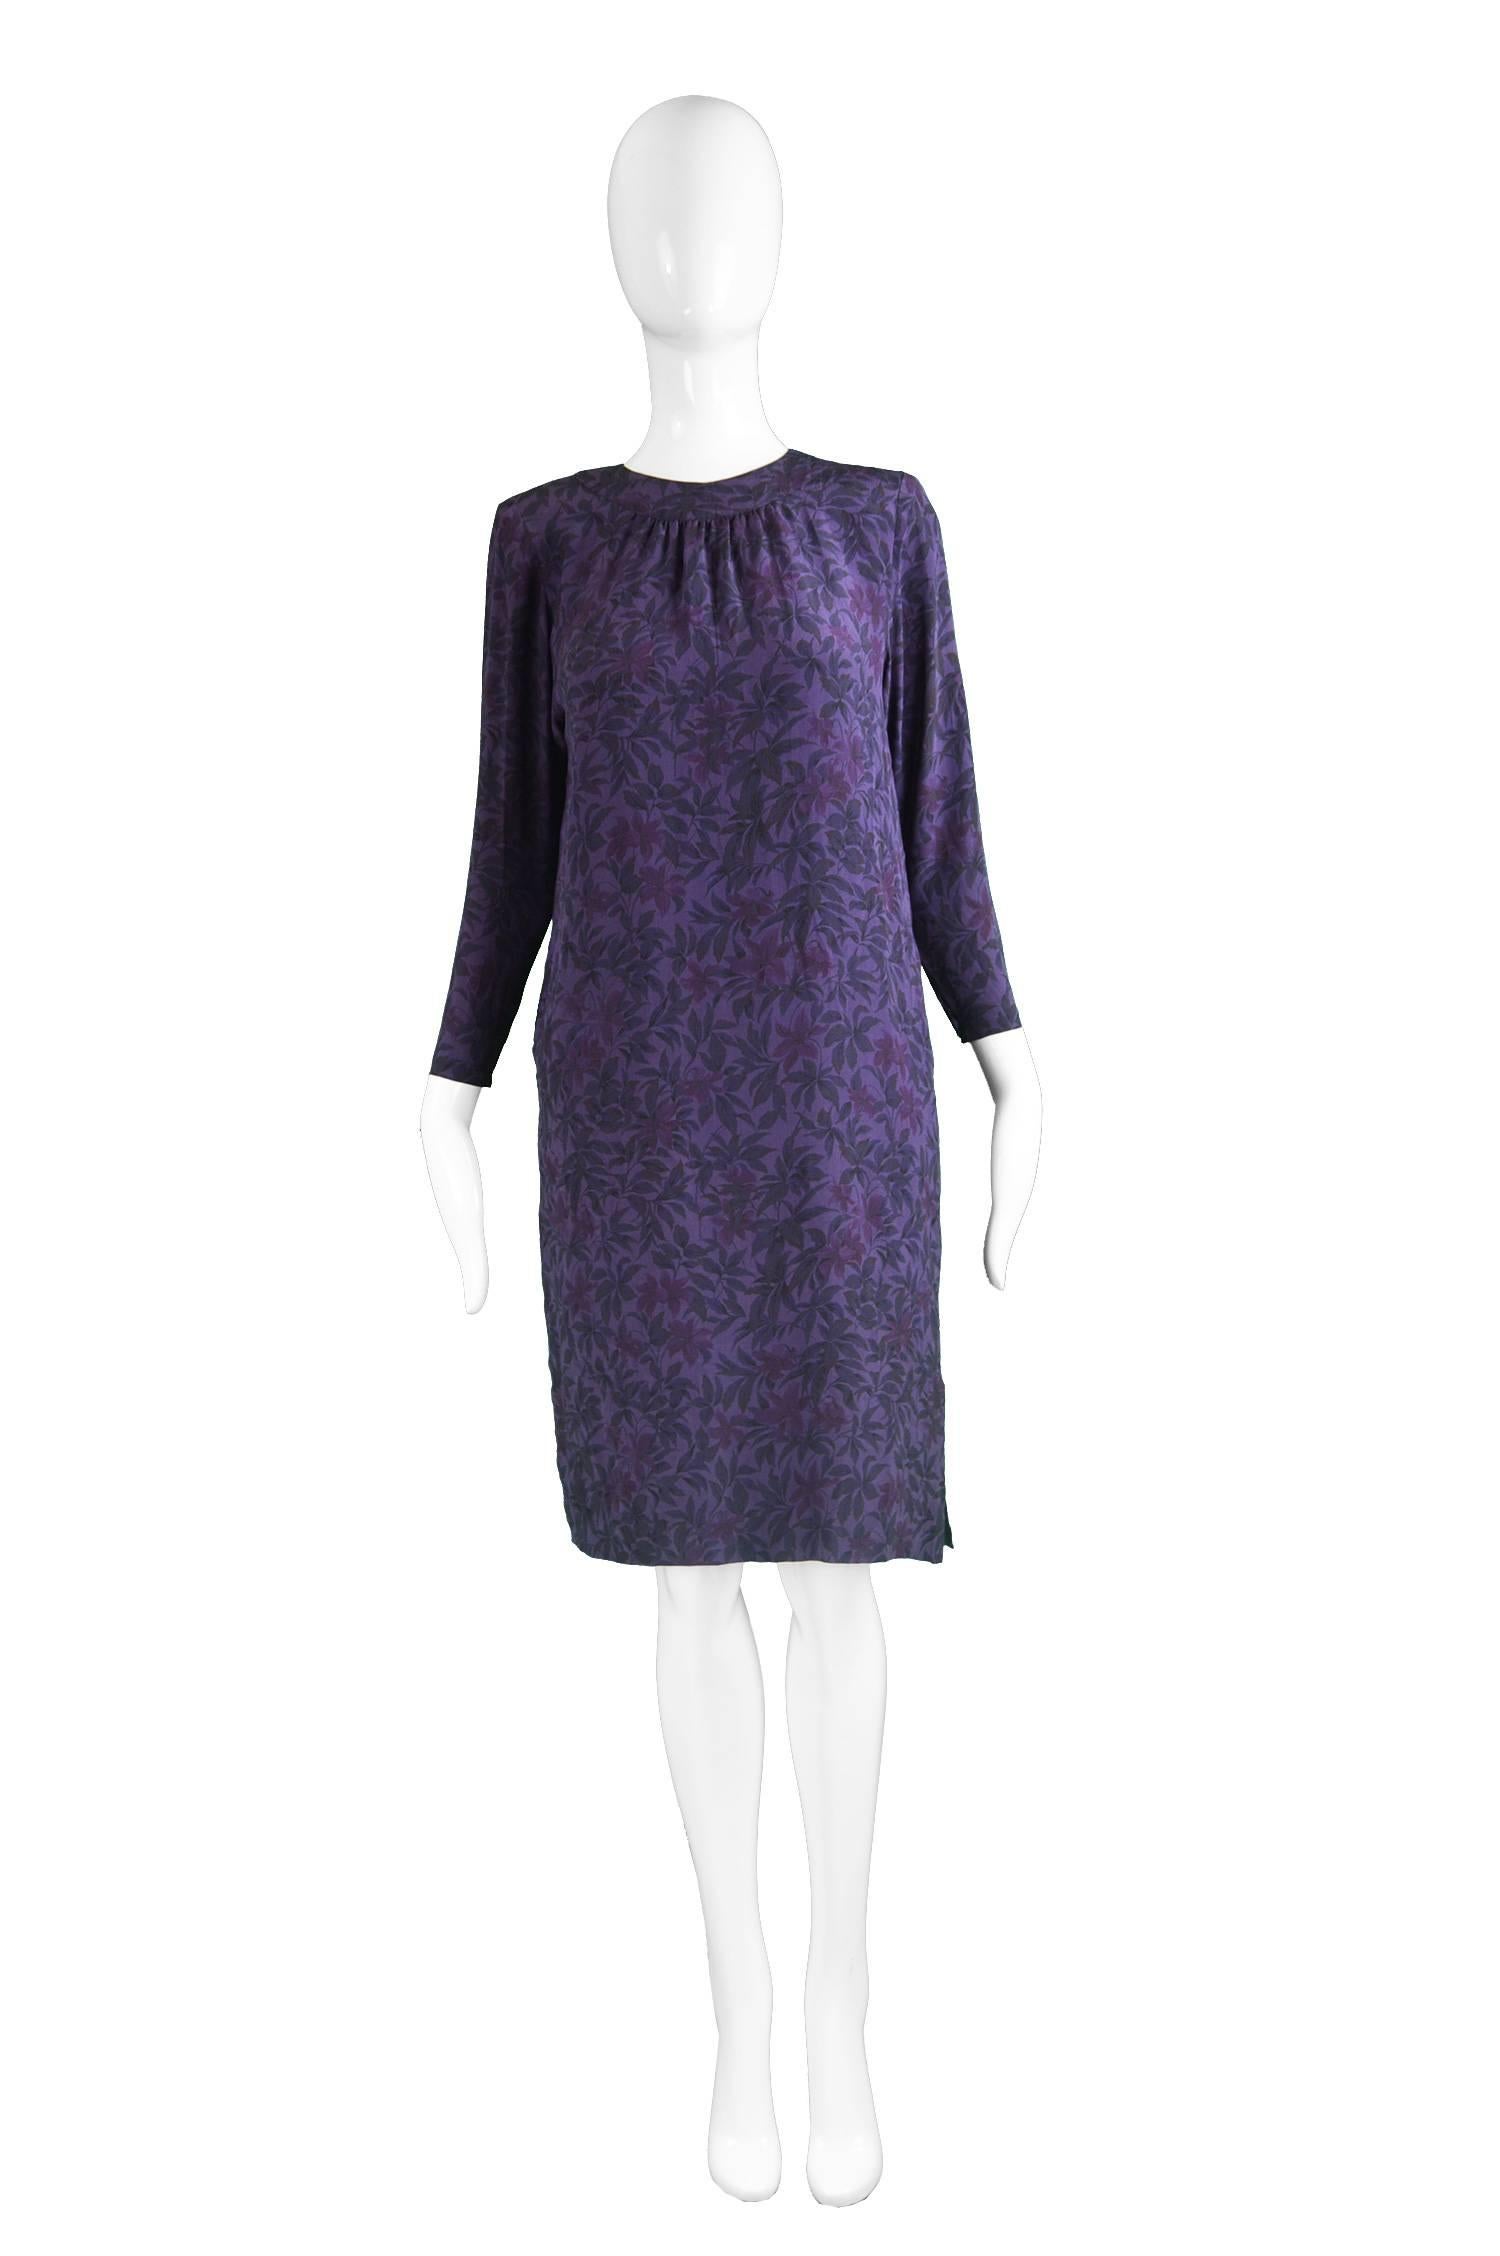 Hanae Mori Purple Vintage Hibiscus Print Simple Silk Shift Dress, 1980s

Estimated Size: UK 12-14/  US 8-10/ EU 40-42.
Bust - 38” / 96cm
Waist - up to 38” / 96cm
Hips - 38” / 96cm
Length (Shoulder to Hem) - 37” / 94cm
Shoulder to Shoulder - 14” /